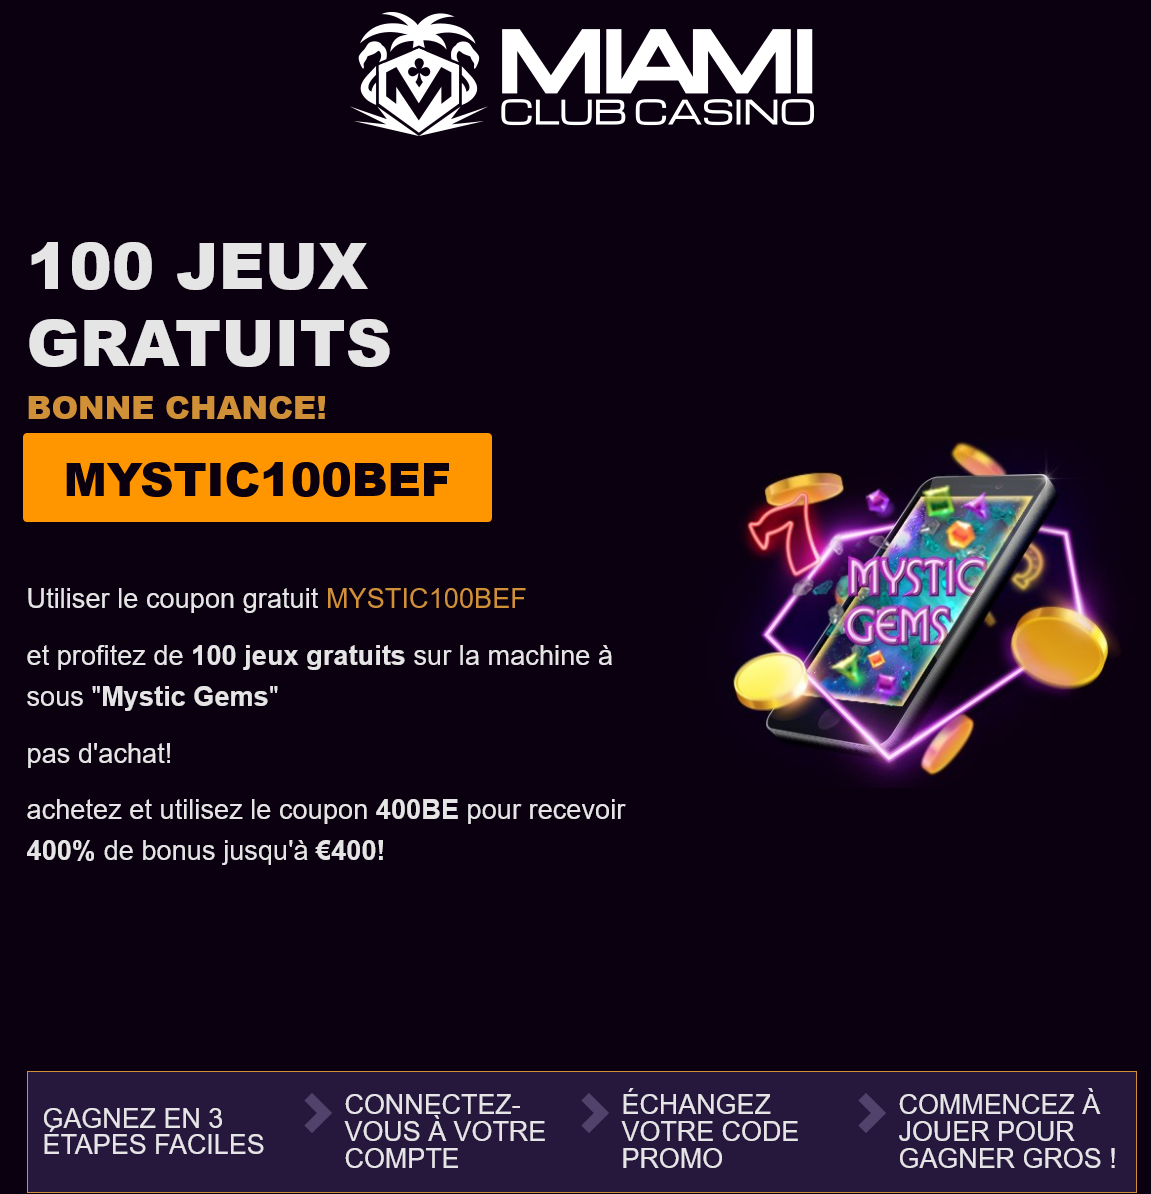 Miami Club
                                                        BE 100 tours
                                                        gratuits